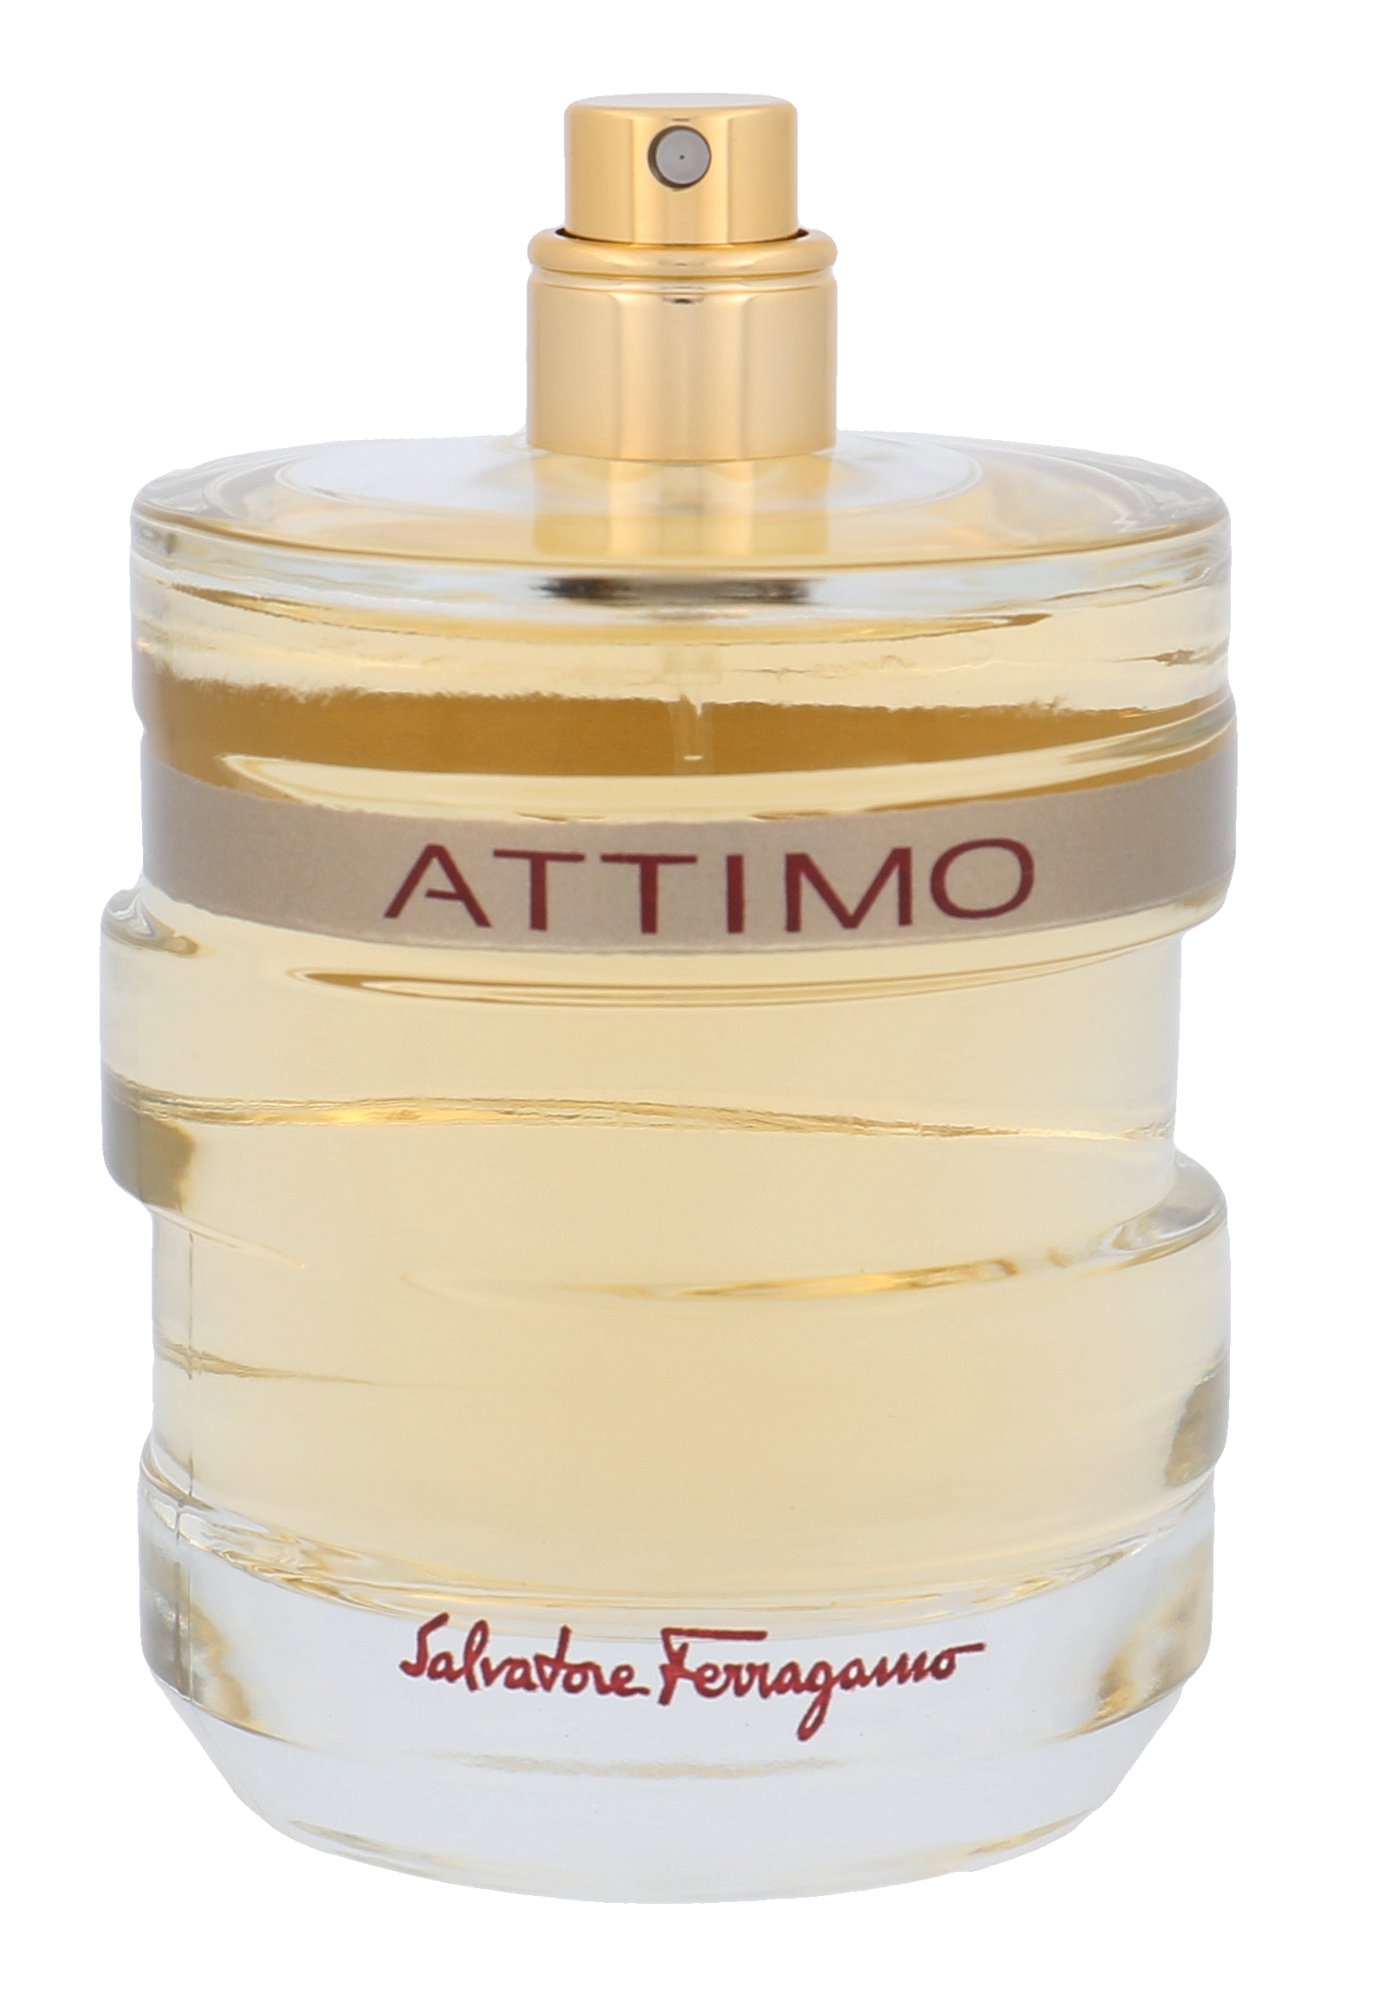 Salvatore Ferragamo Attimo, Parfumovaná voda 100ml, Tester